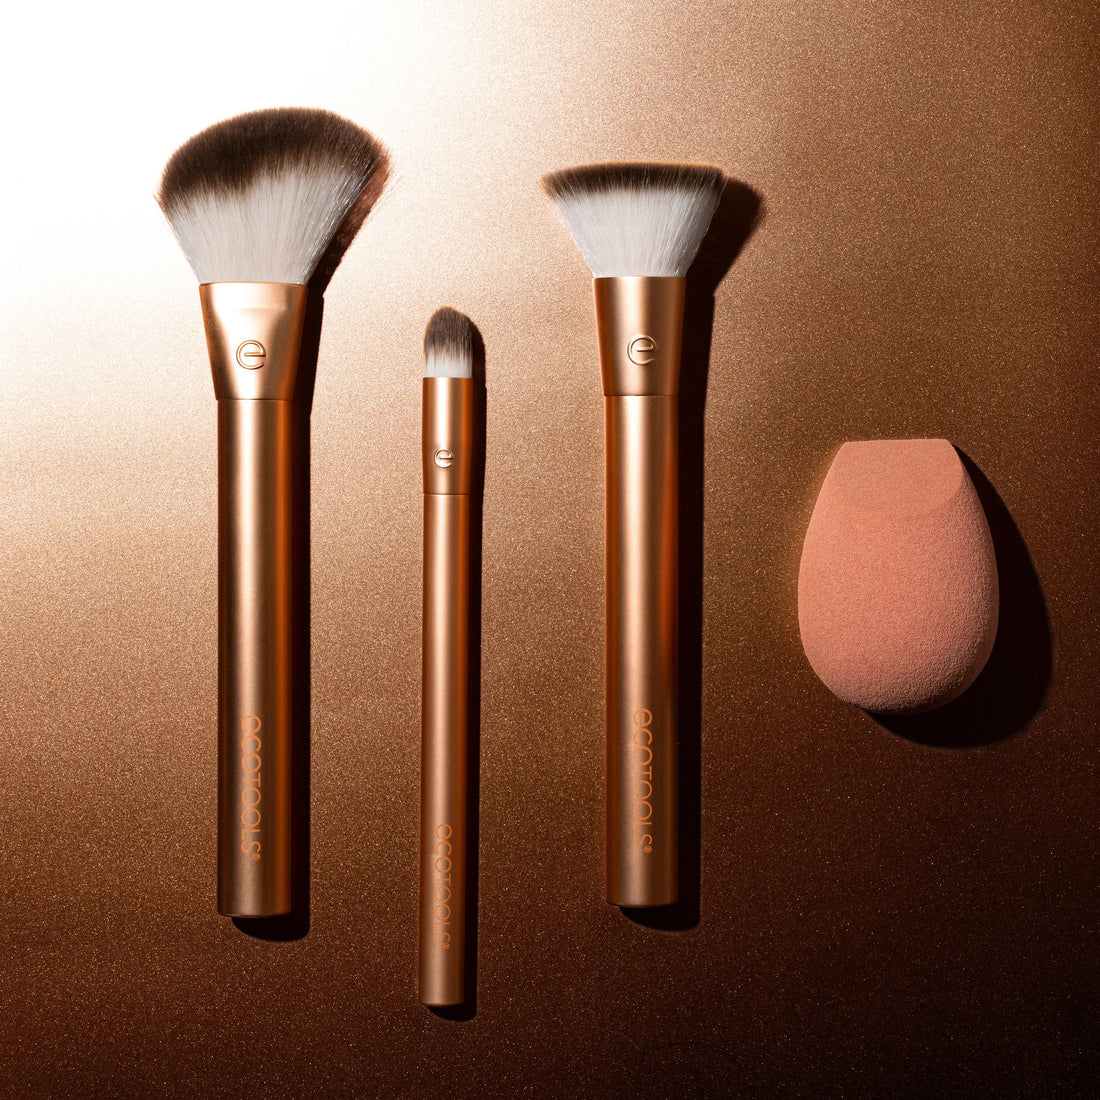 EcoTools Precious Metals Face Blend & Sculpt Set, Makeup Brush Kit